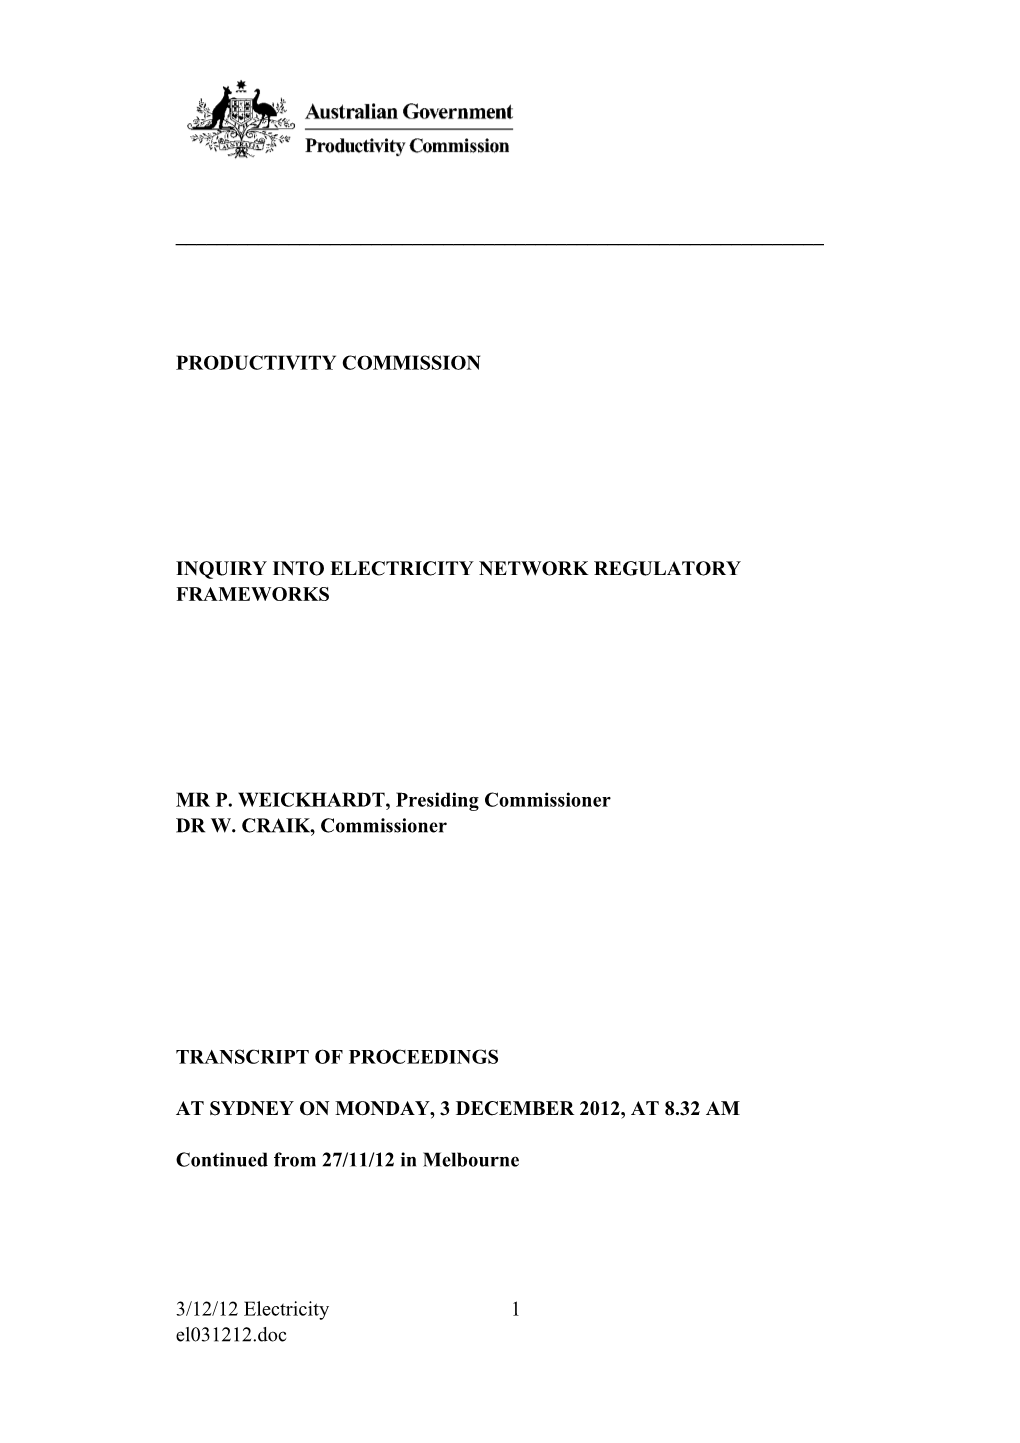 3 December 2012 - Sydney Public Hearing Transcript - Electricity Network Regulation